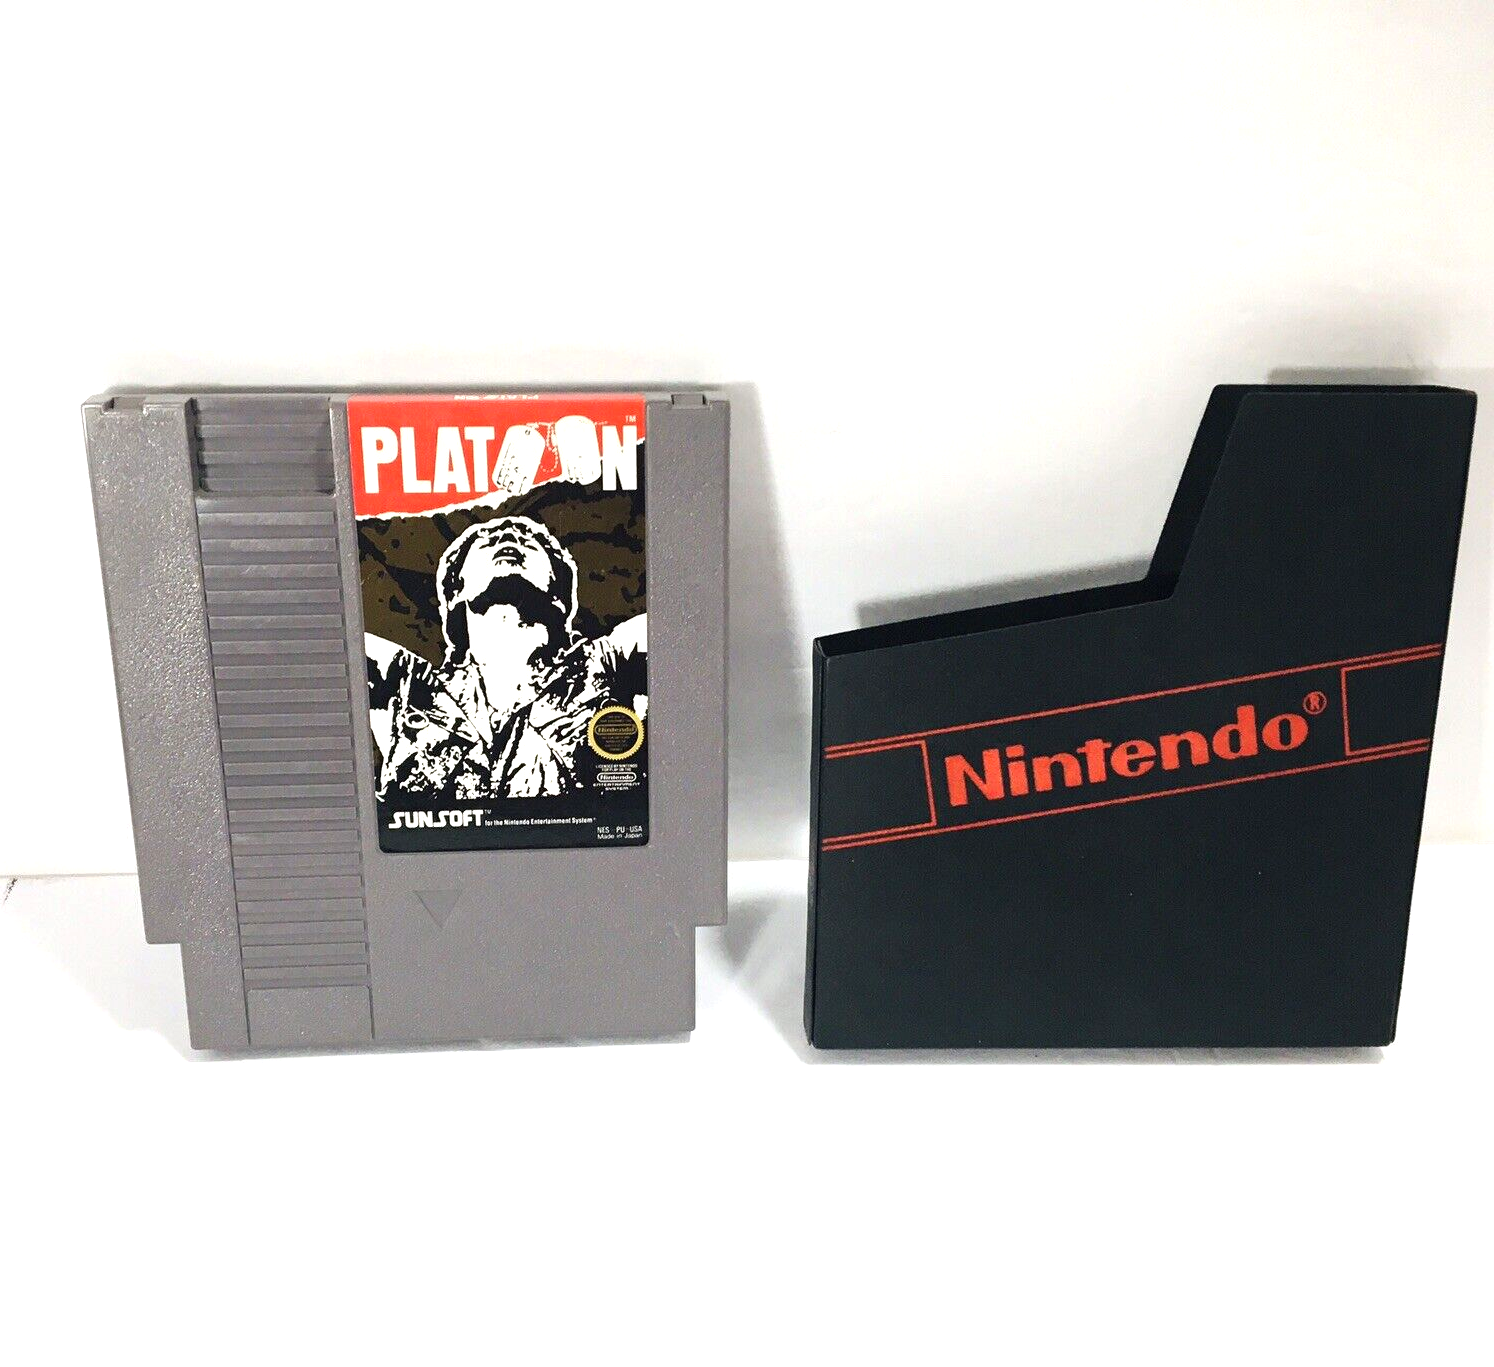 Primary image for Platoon NES (Nintendo Entertainment System, 1985) Cartridge & Holder Case